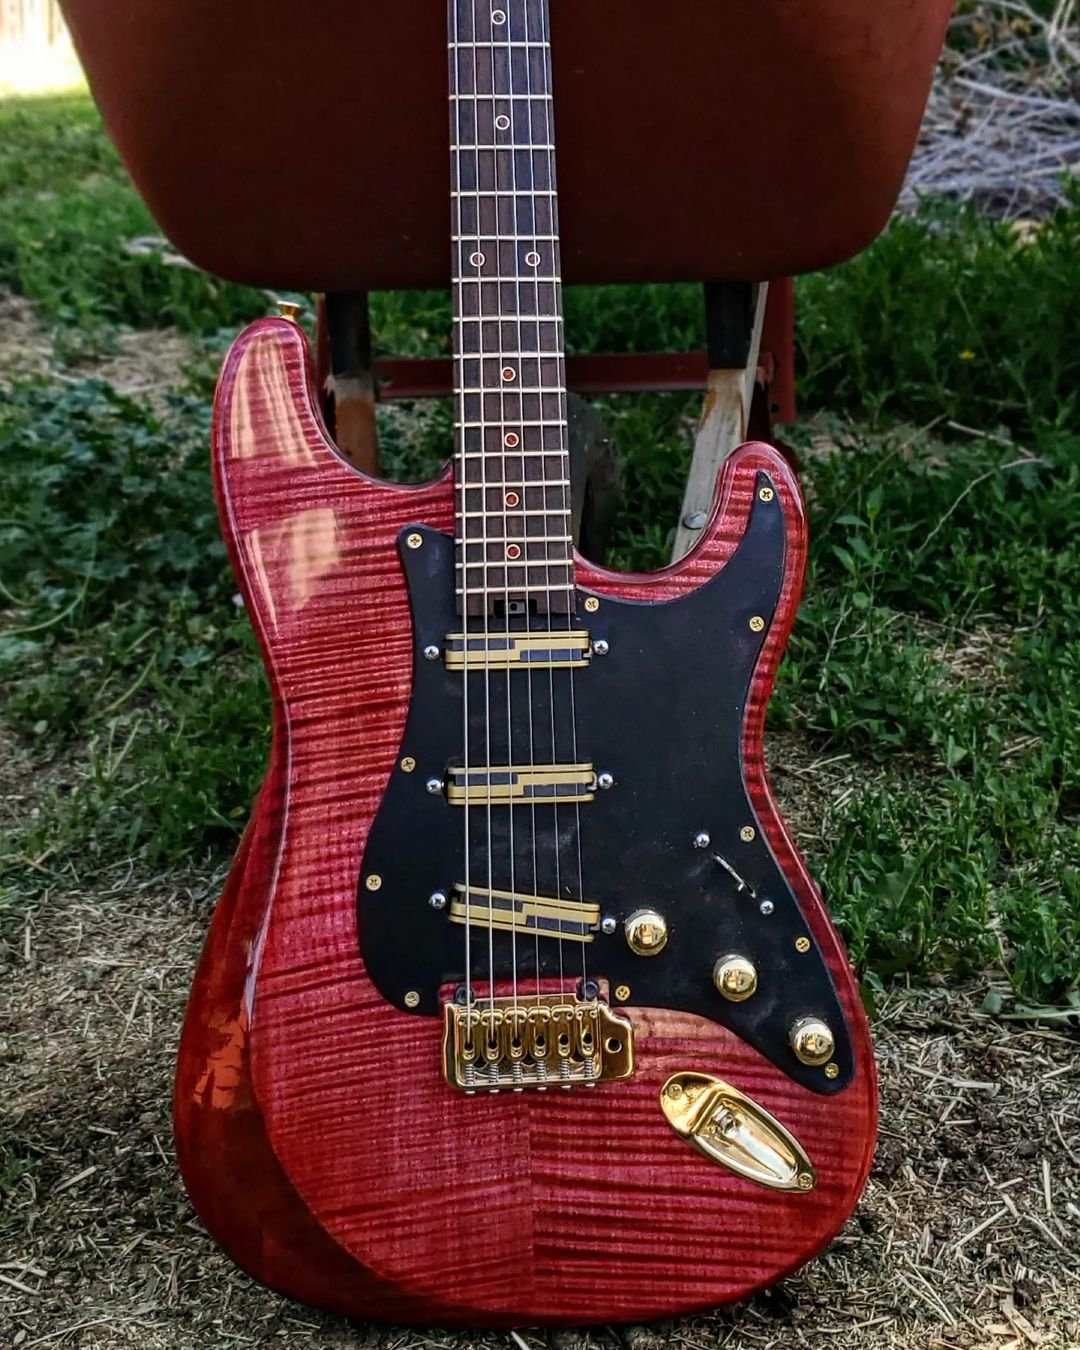 Rebirth Guitar Co custom stratocaster guitar